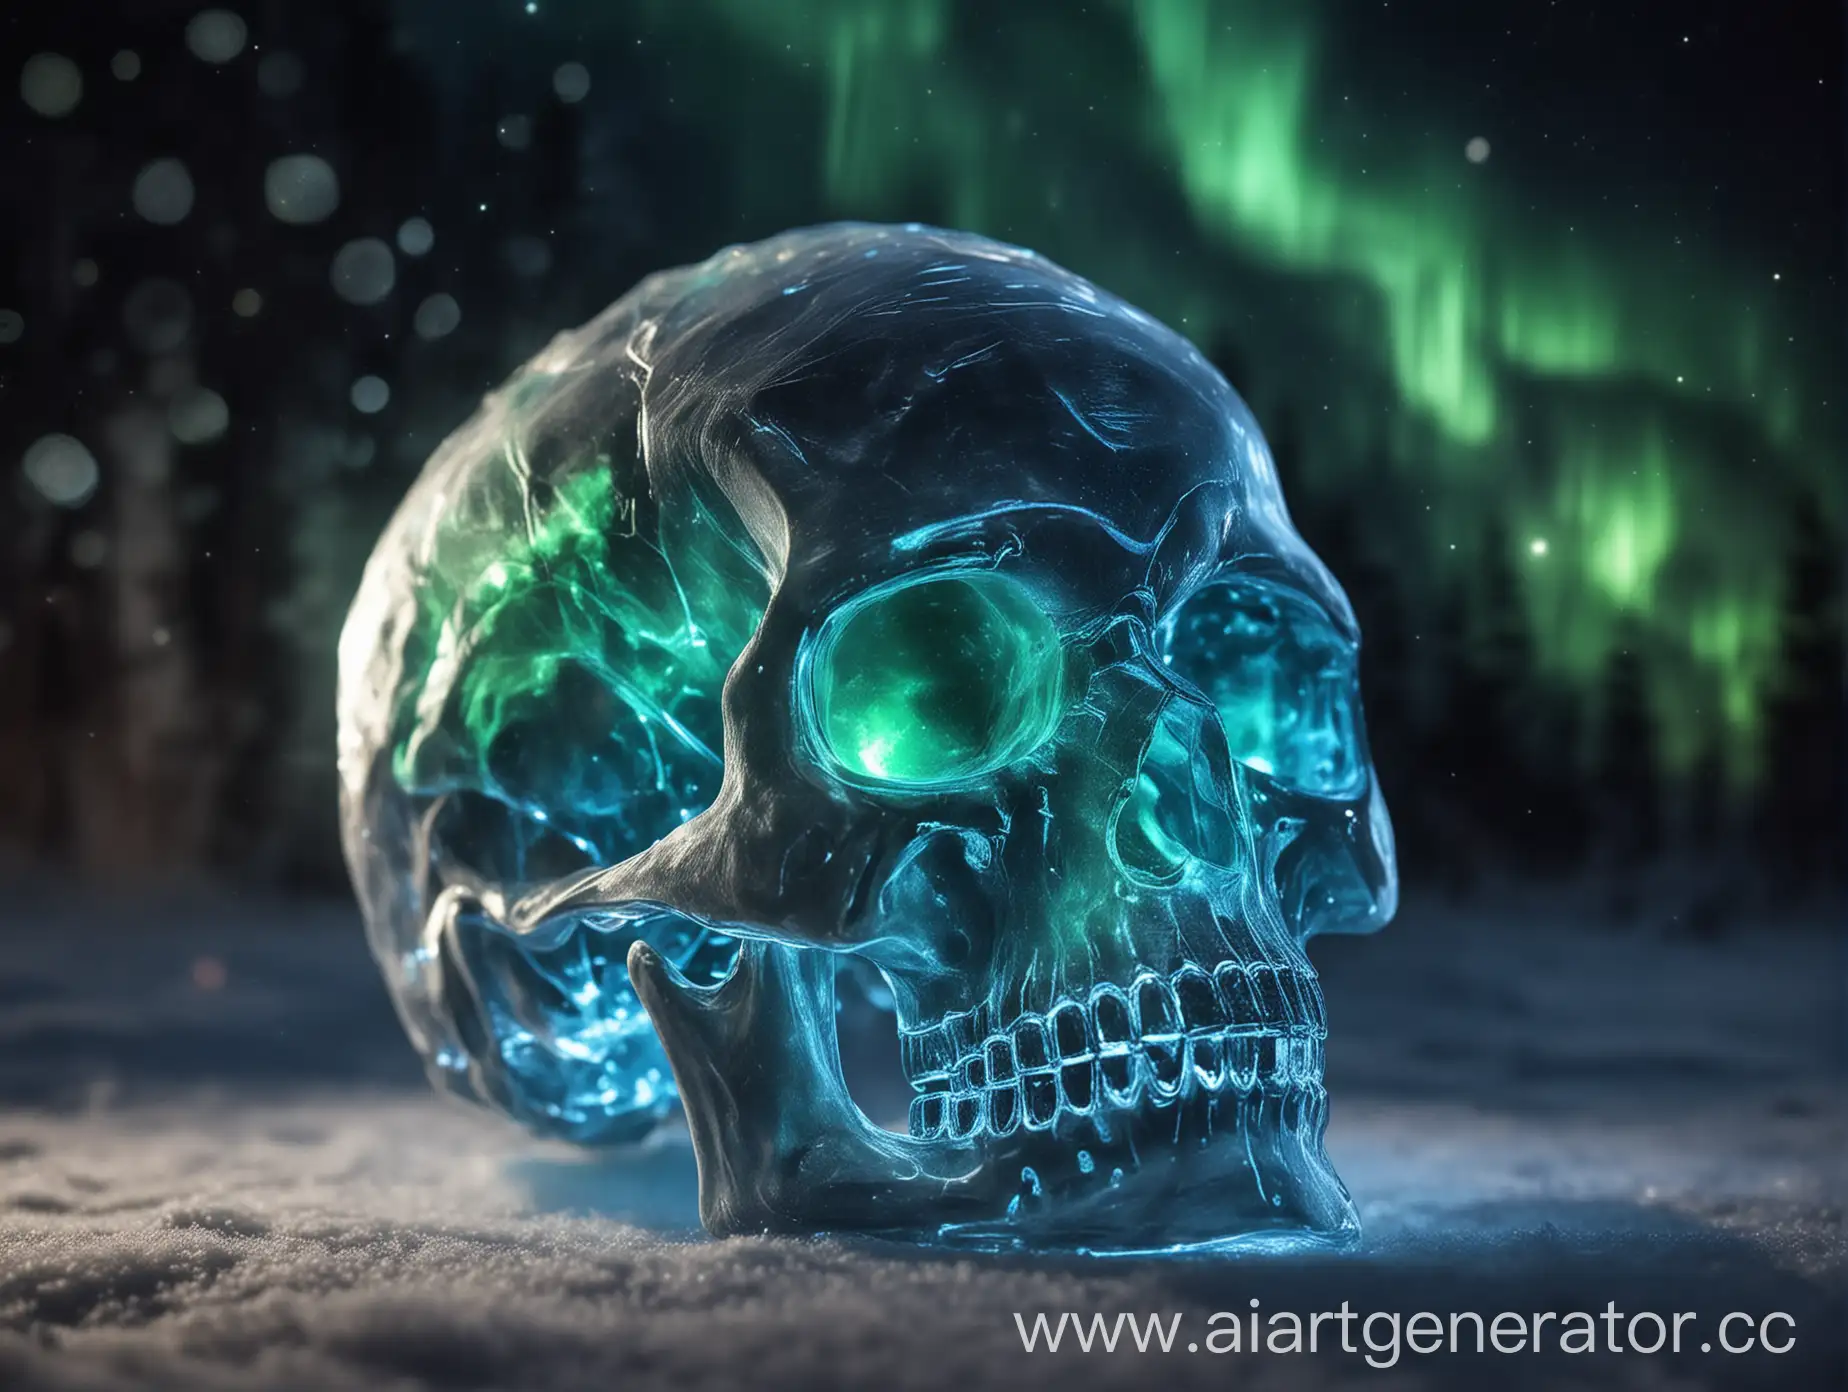 Northern-Lights-Illuminate-Crystal-Skull-in-Ethereal-Blur